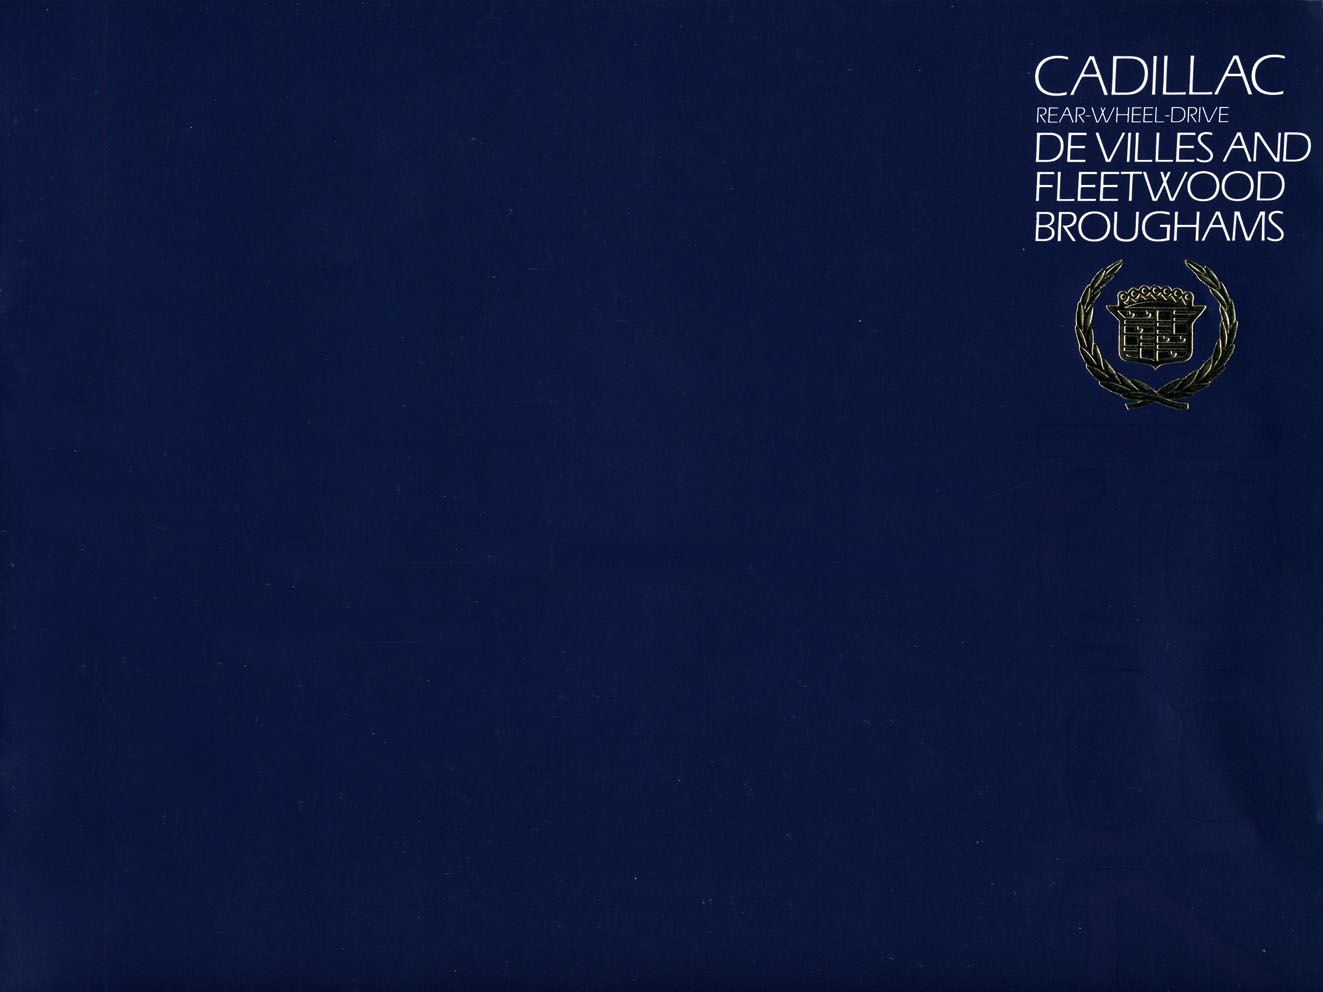 1984_Cadillac-01